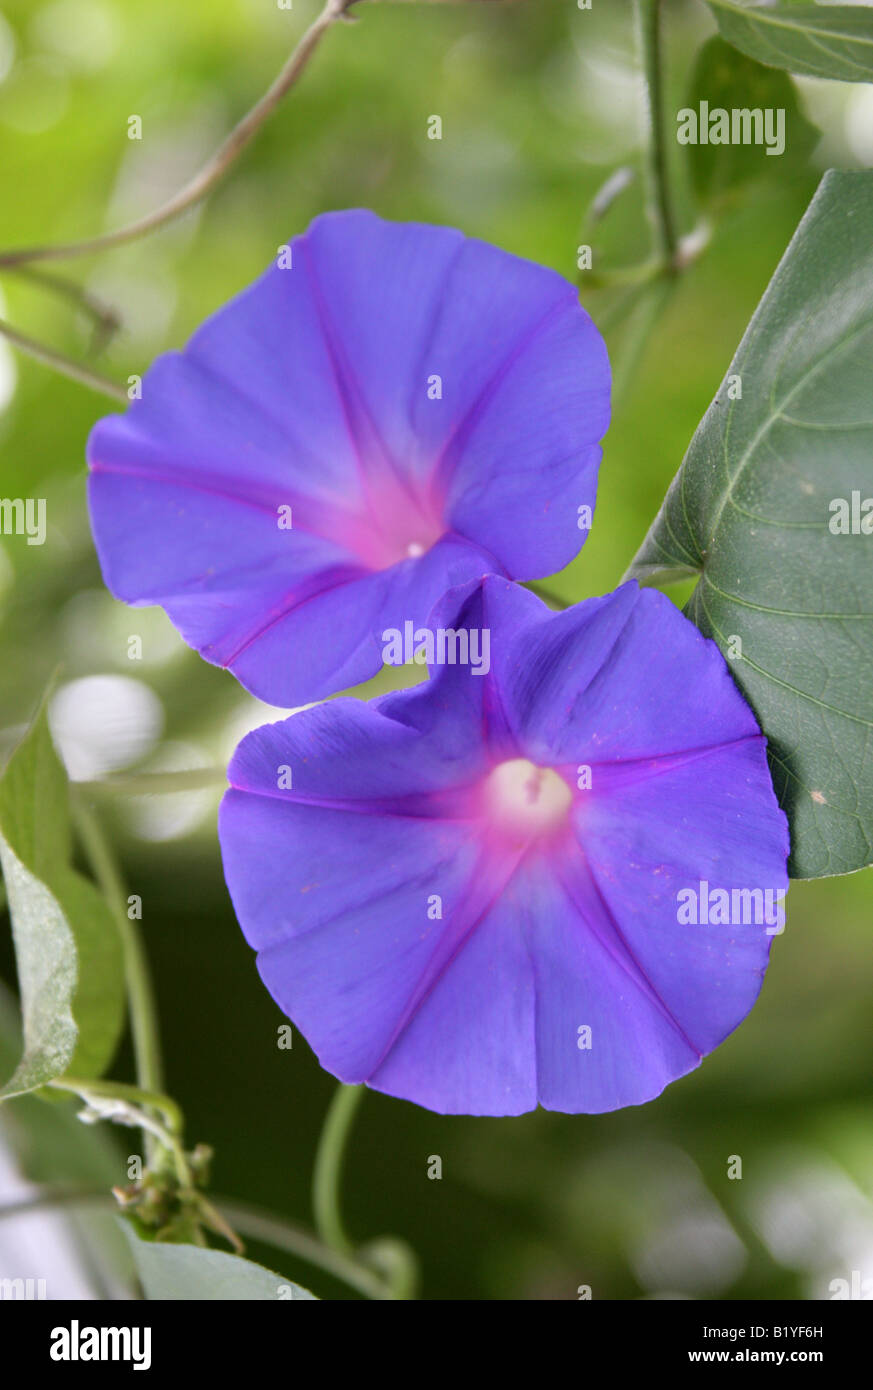 Common or Morning Glory, Ipomoea purpurea Stock Photo